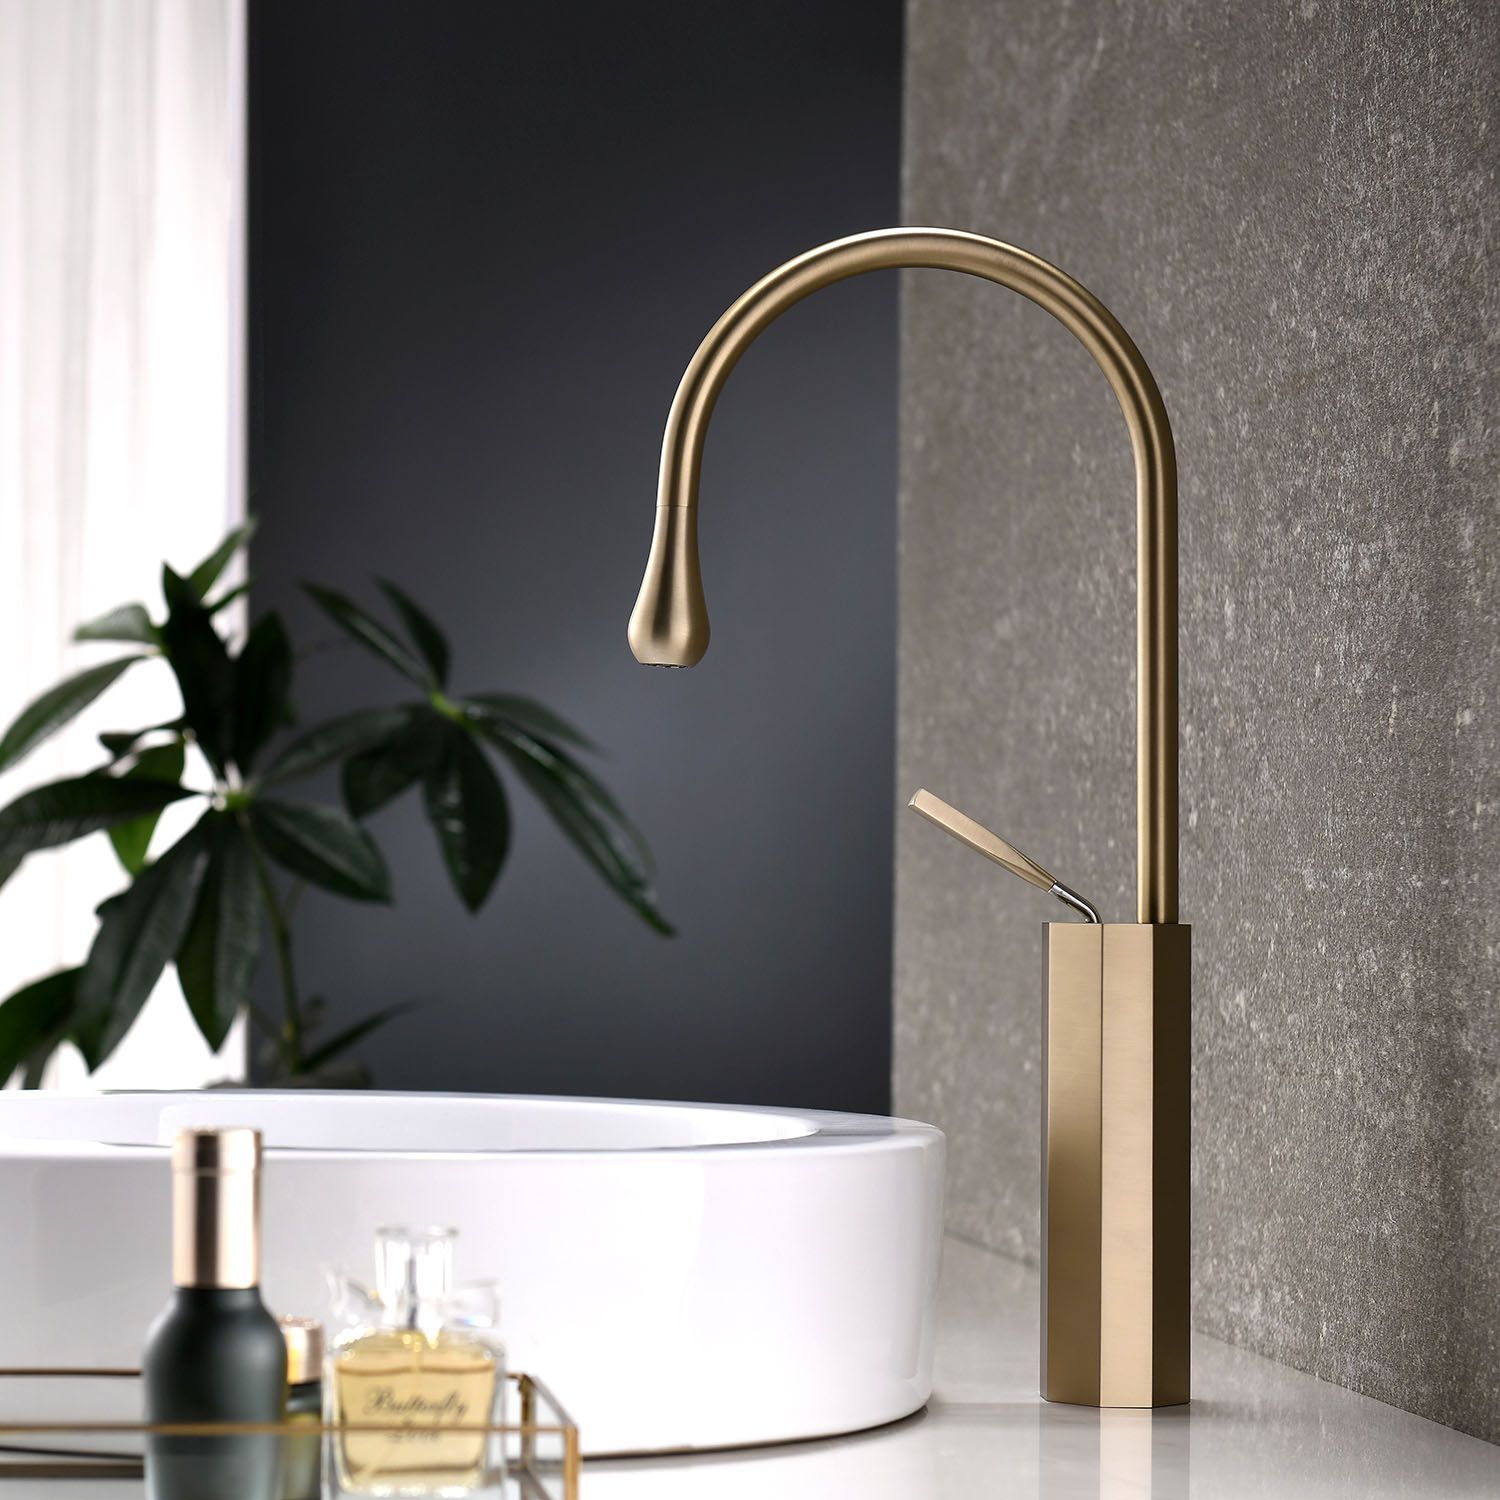 Gold Tap Designs: Luxury Meets Functionality in Bathroom Fixtures